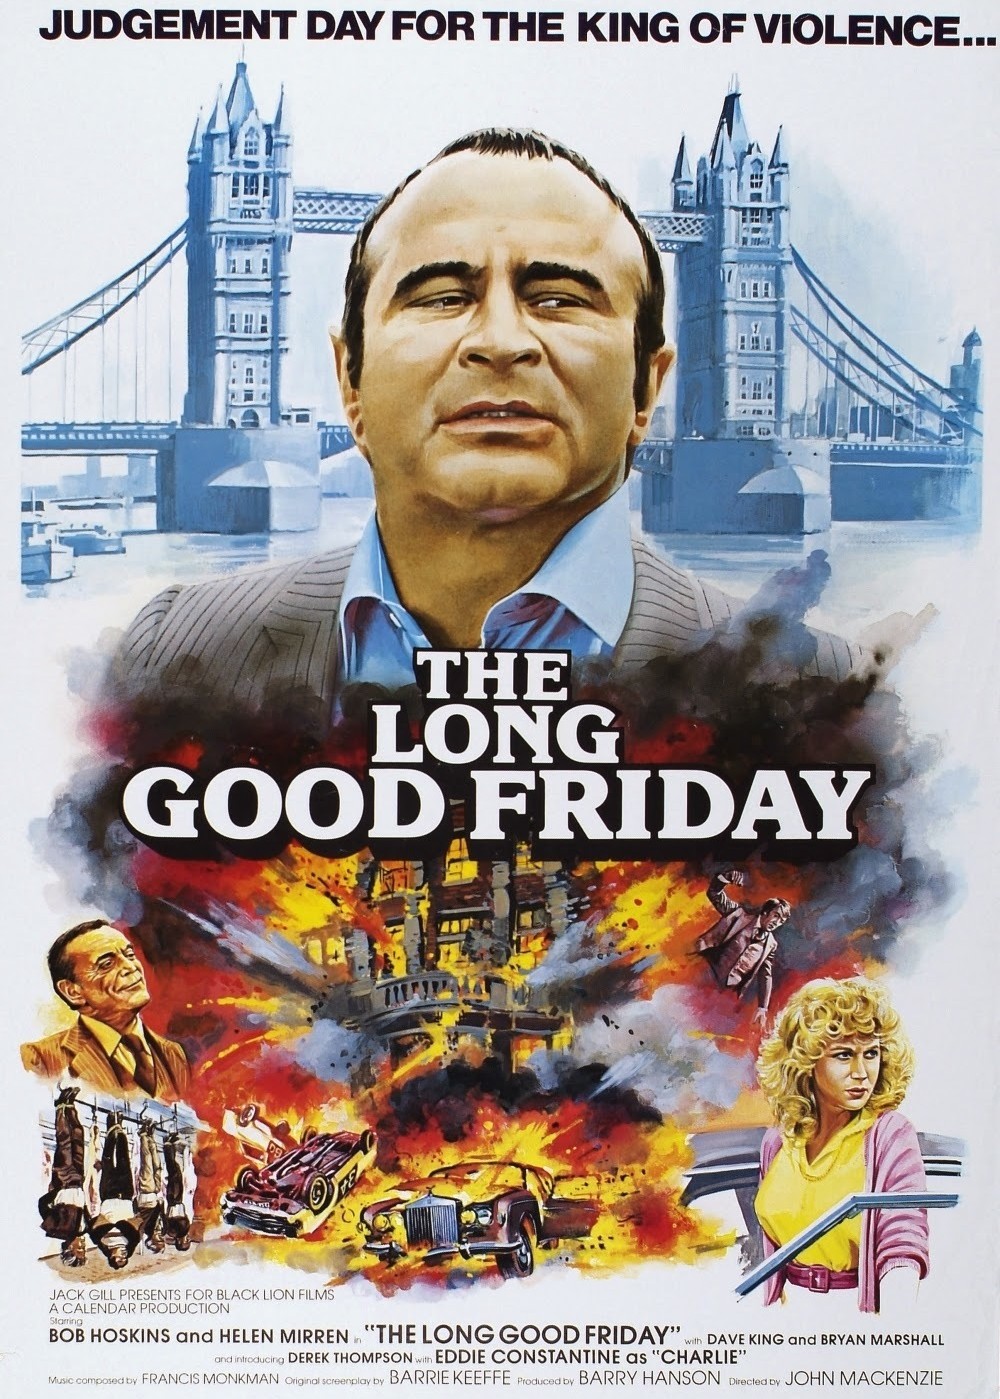 Nonton film The Long Good Friday layarkaca21 indoxx1 ganool online streaming terbaru